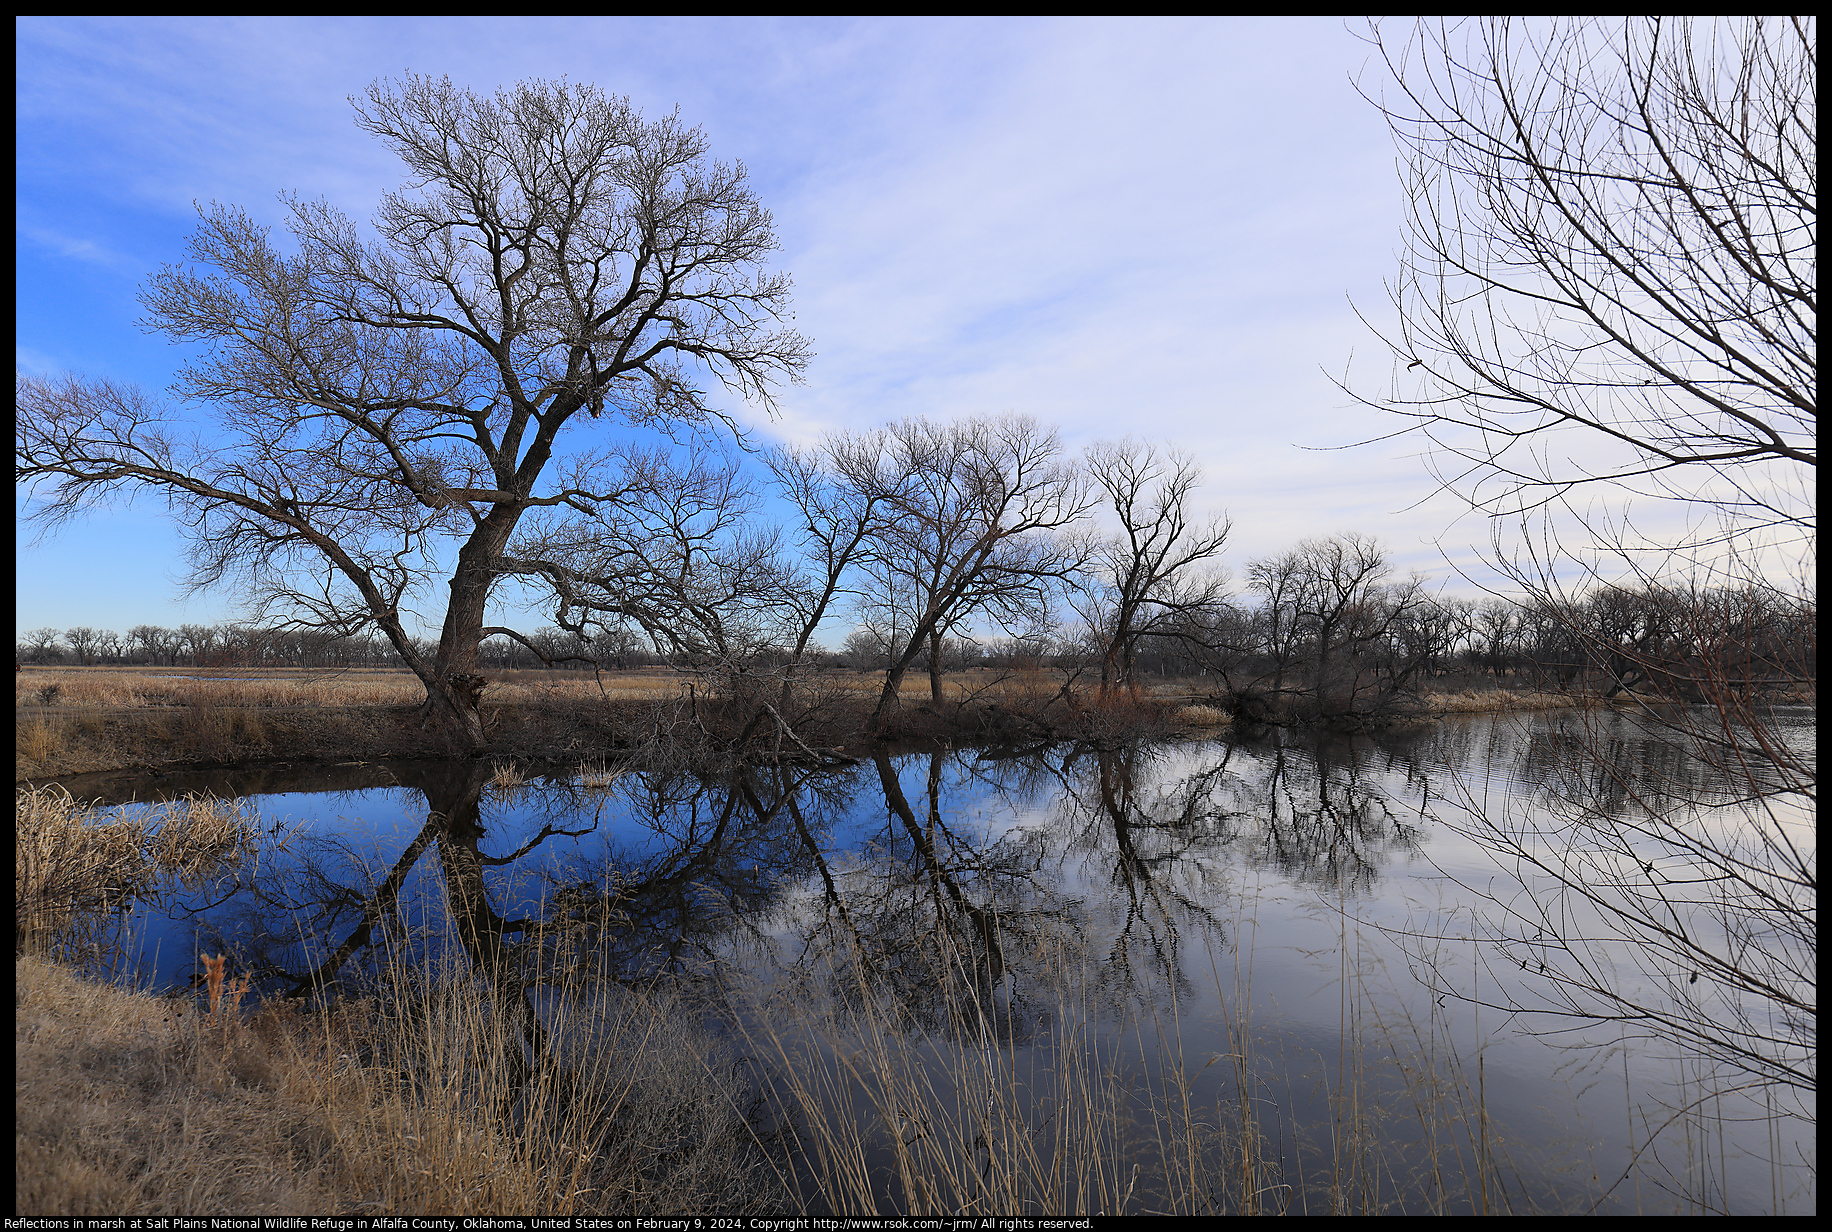 Reflections in marsh at Salt Plains National Wildlife Refuge in Alfalfa County, Oklahoma, United States on February 9, 2024